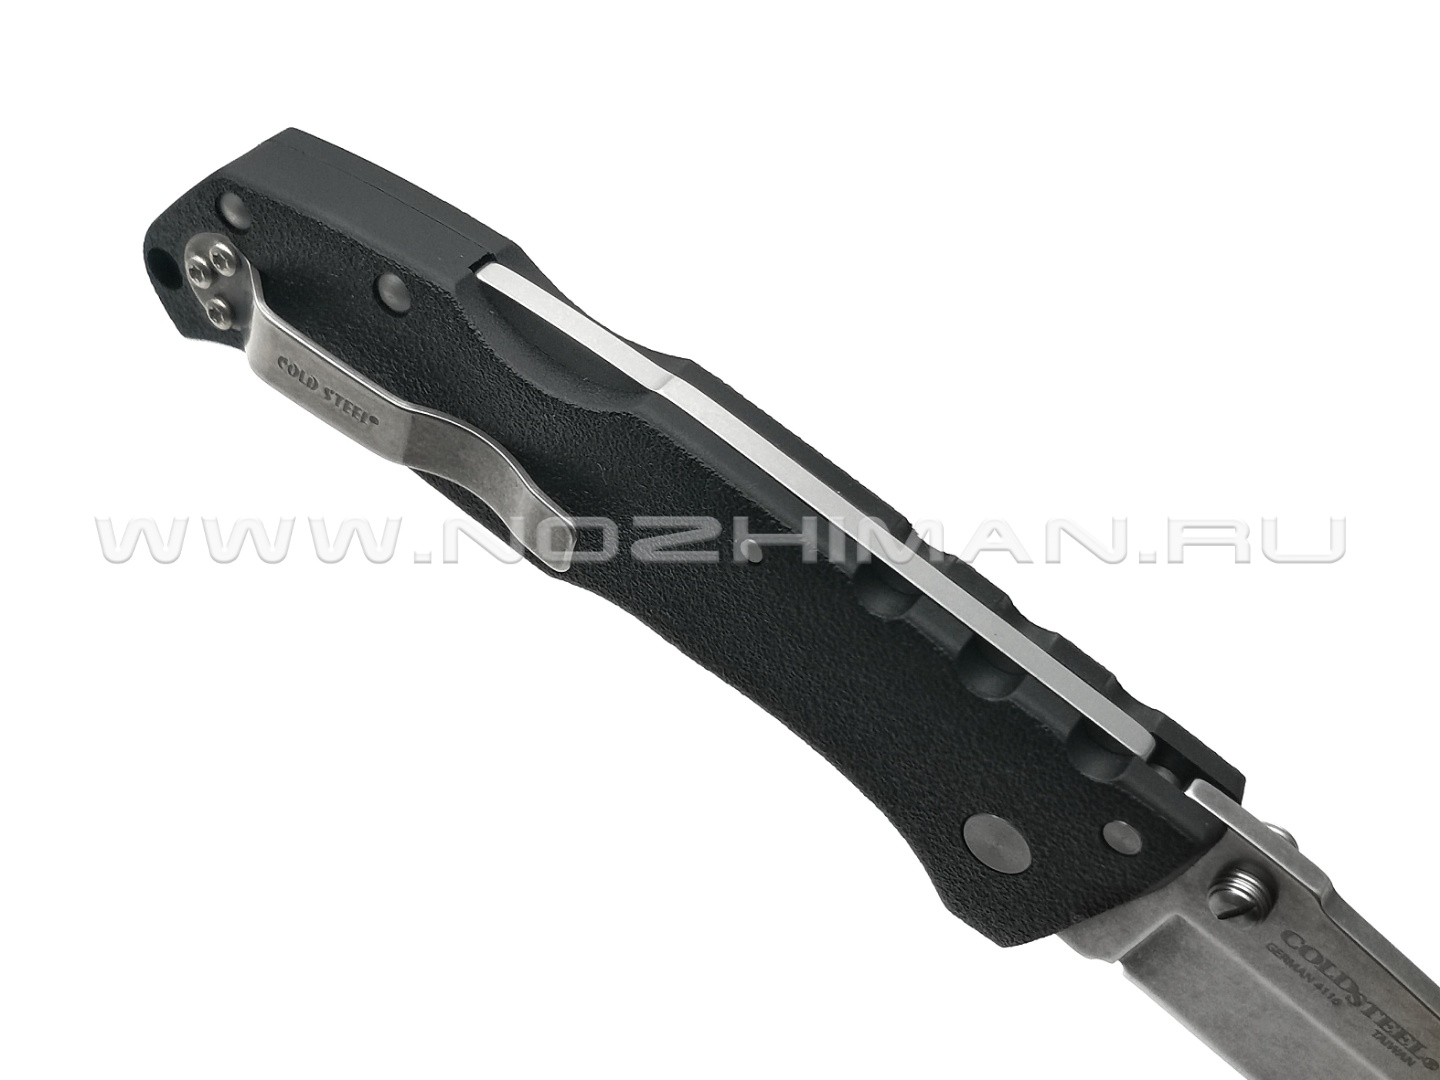 Cold Steel нож Pro Lite Tanto 20NST сталь 1.4116, рукоять FRN black